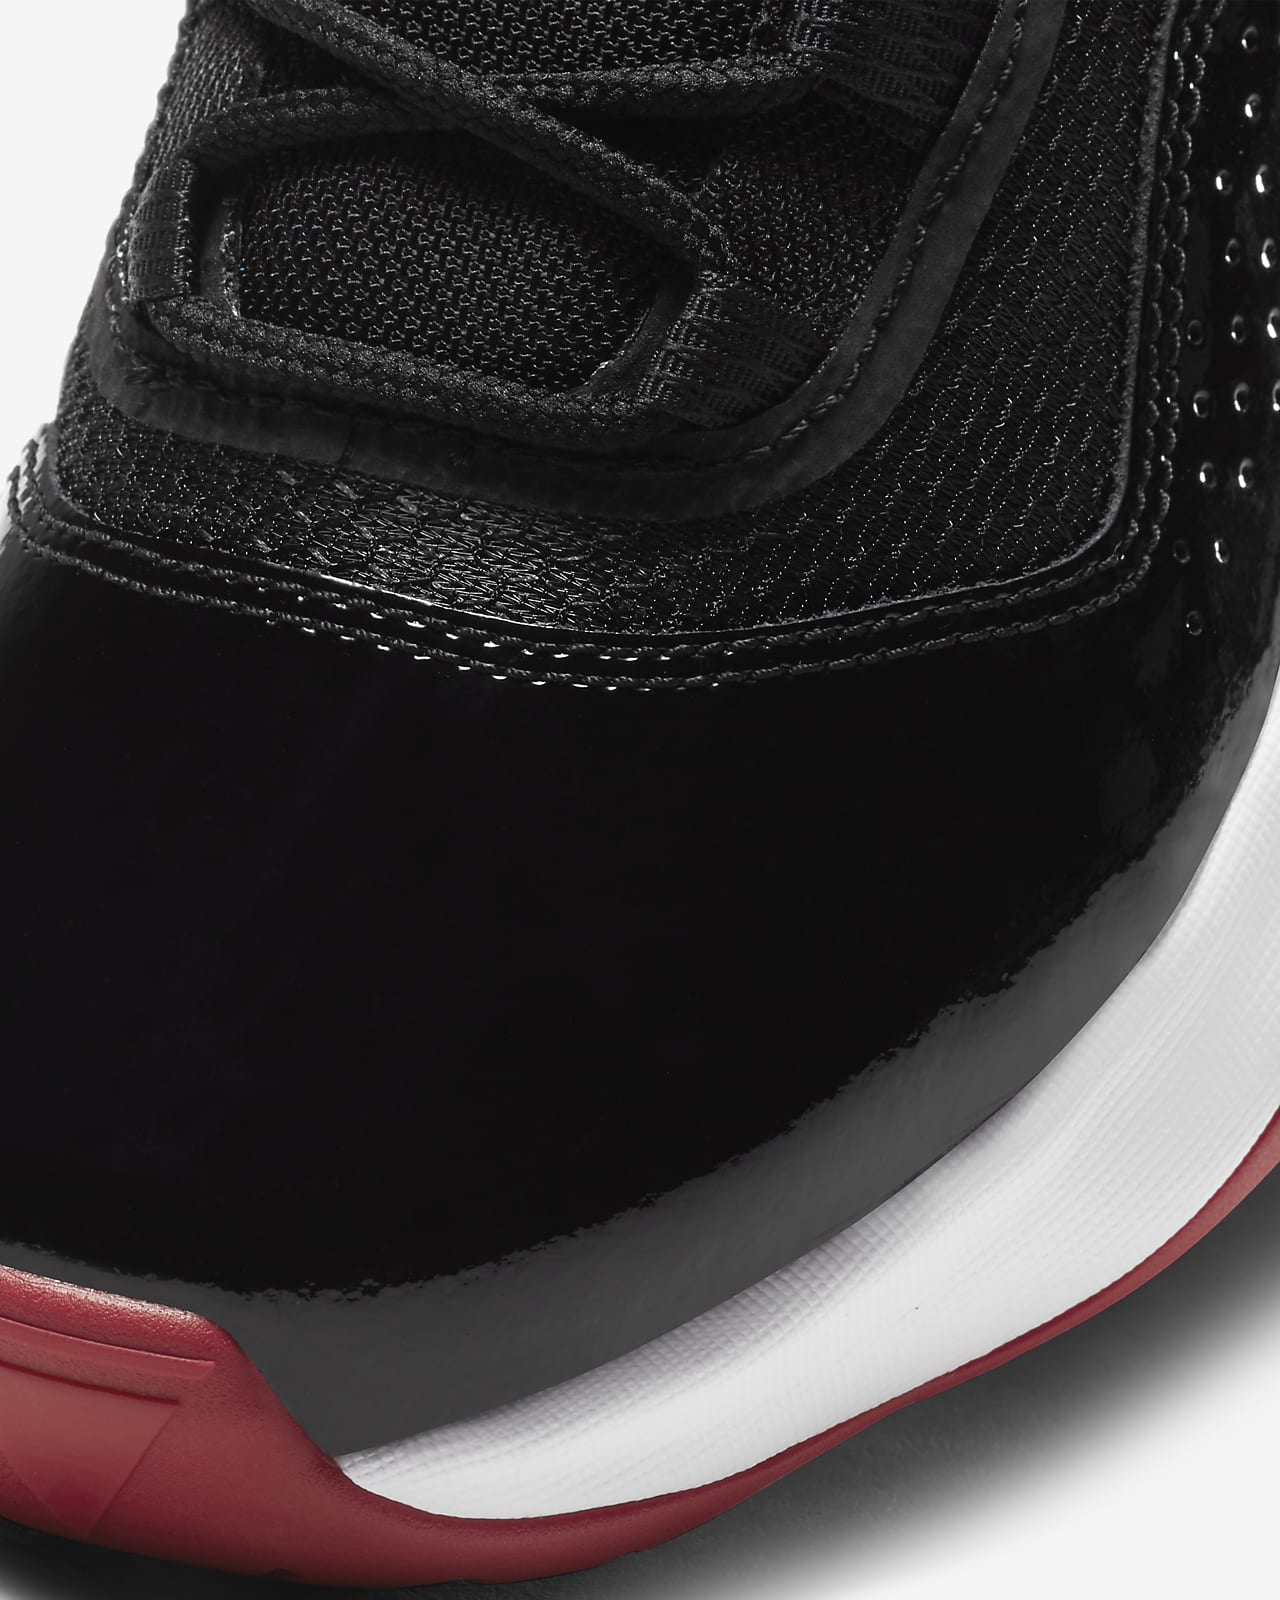 Jordan 11 CMFT Low Big Nike.com